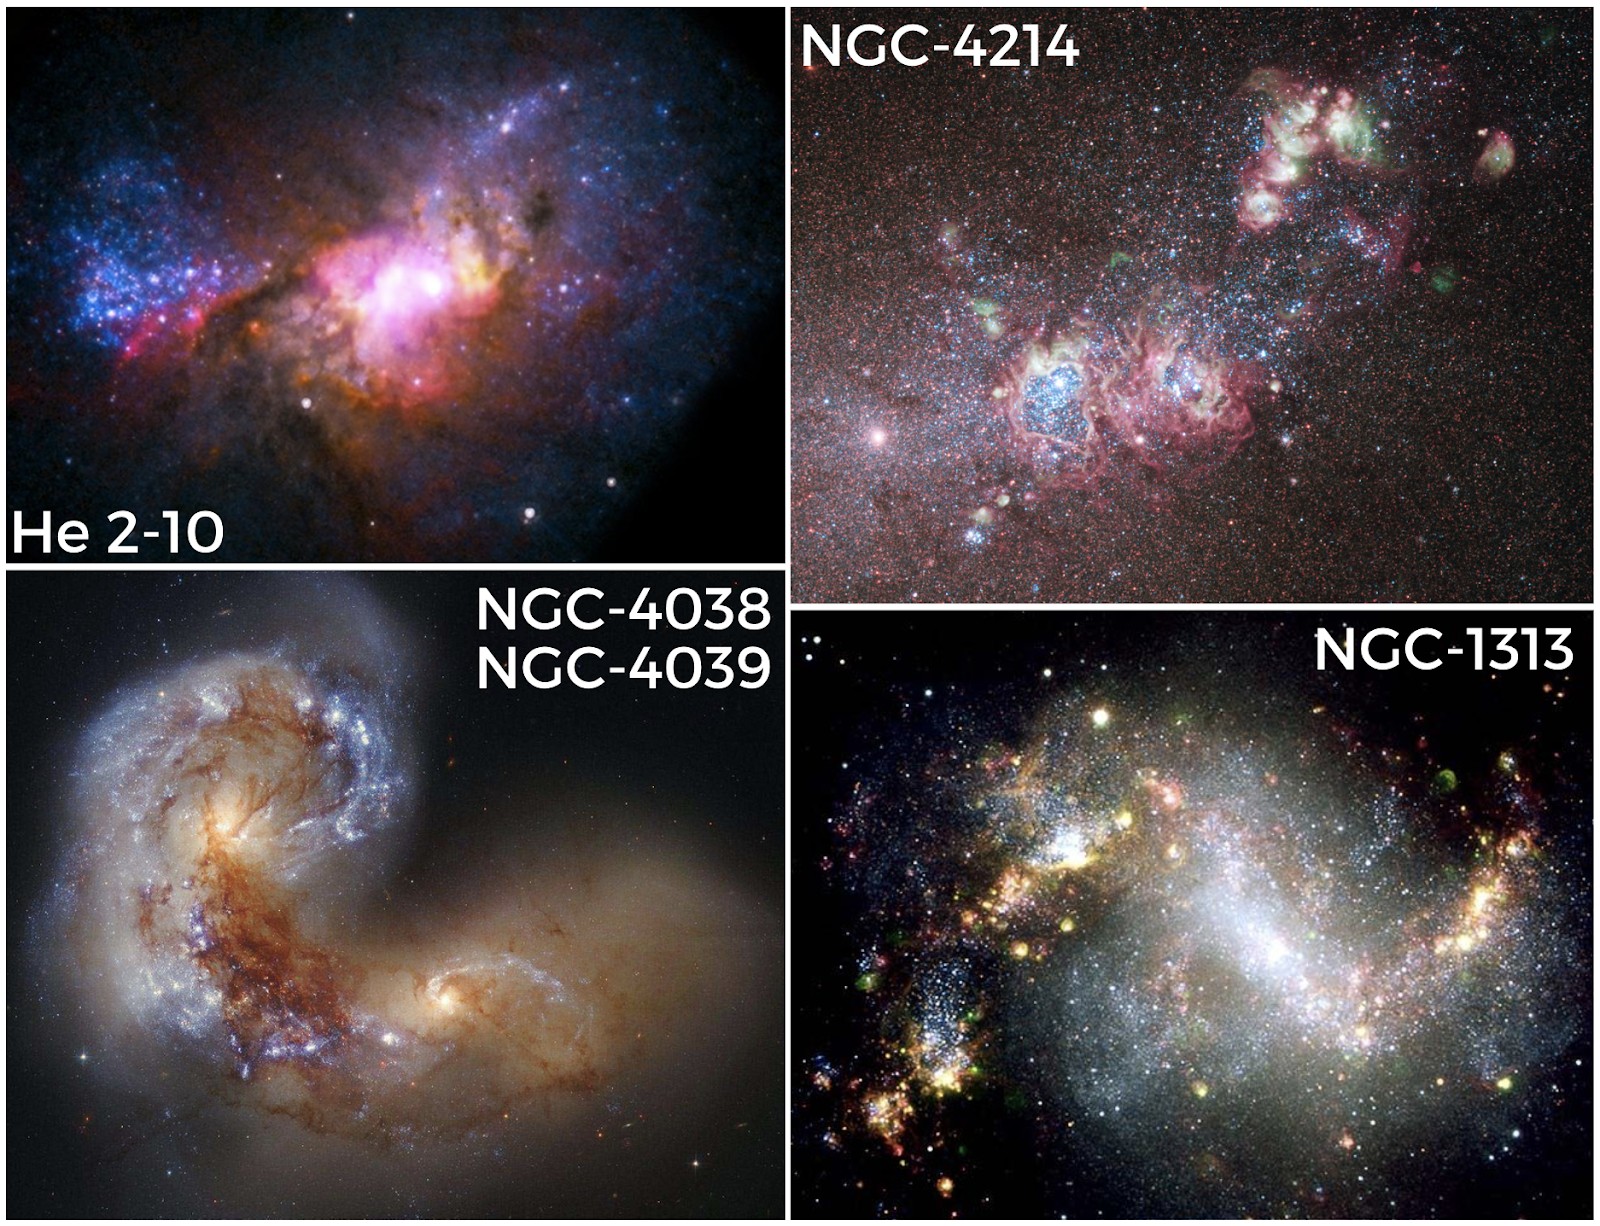 Starburst galaxies